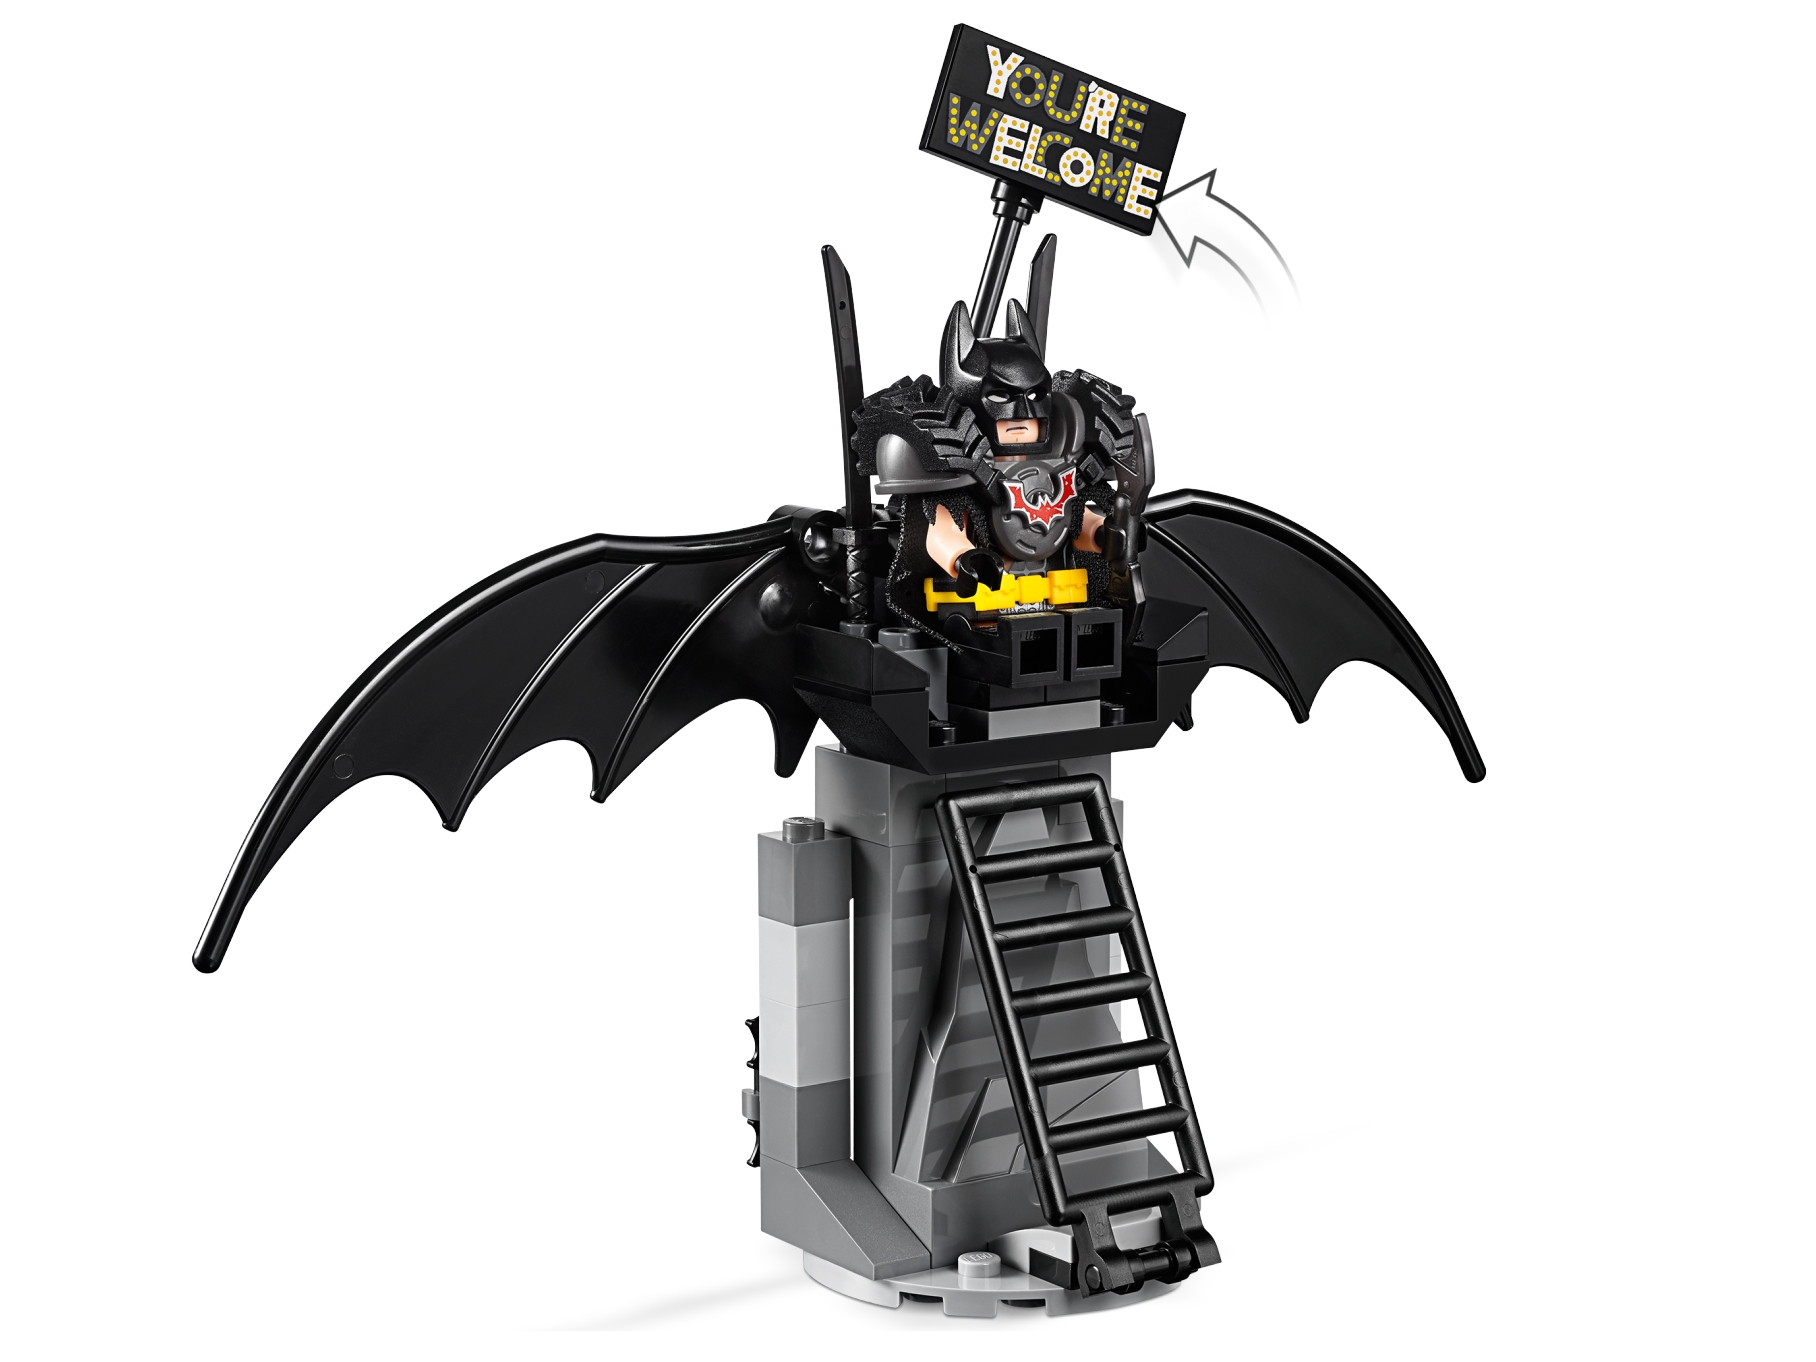 Battle-Ready Batman™ and MetalBeard 70836, Batman™